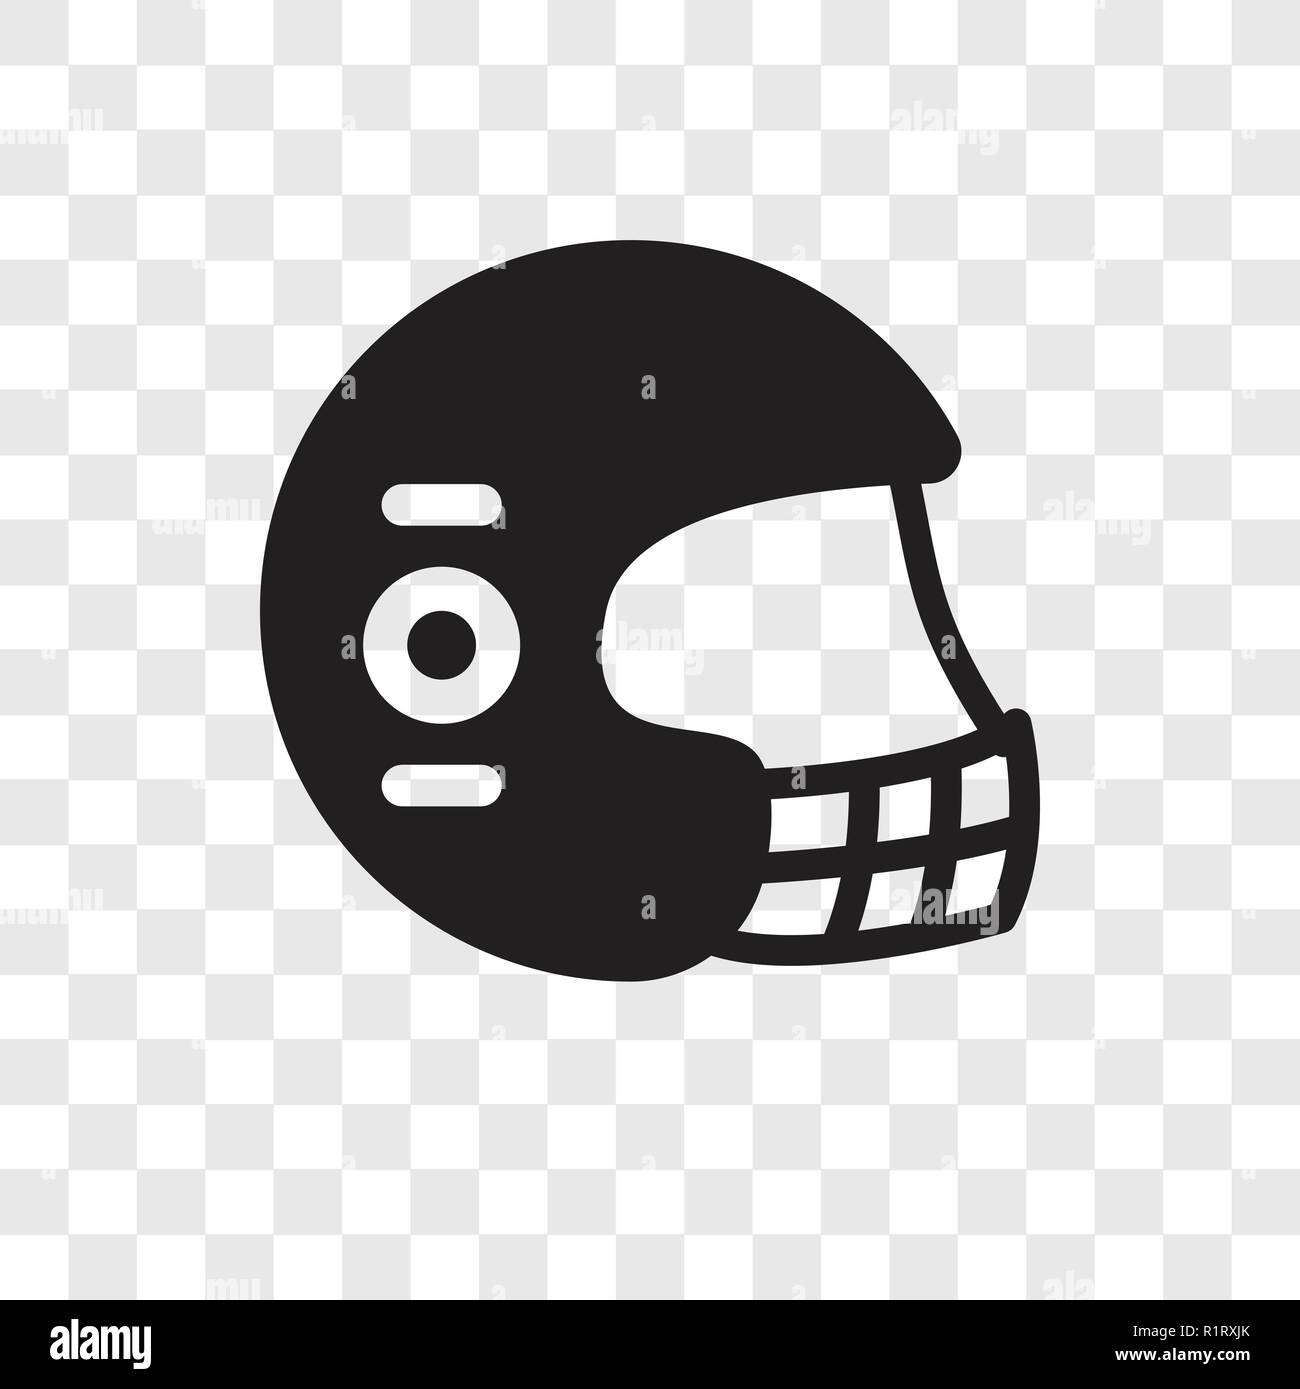 football helmet transparent background